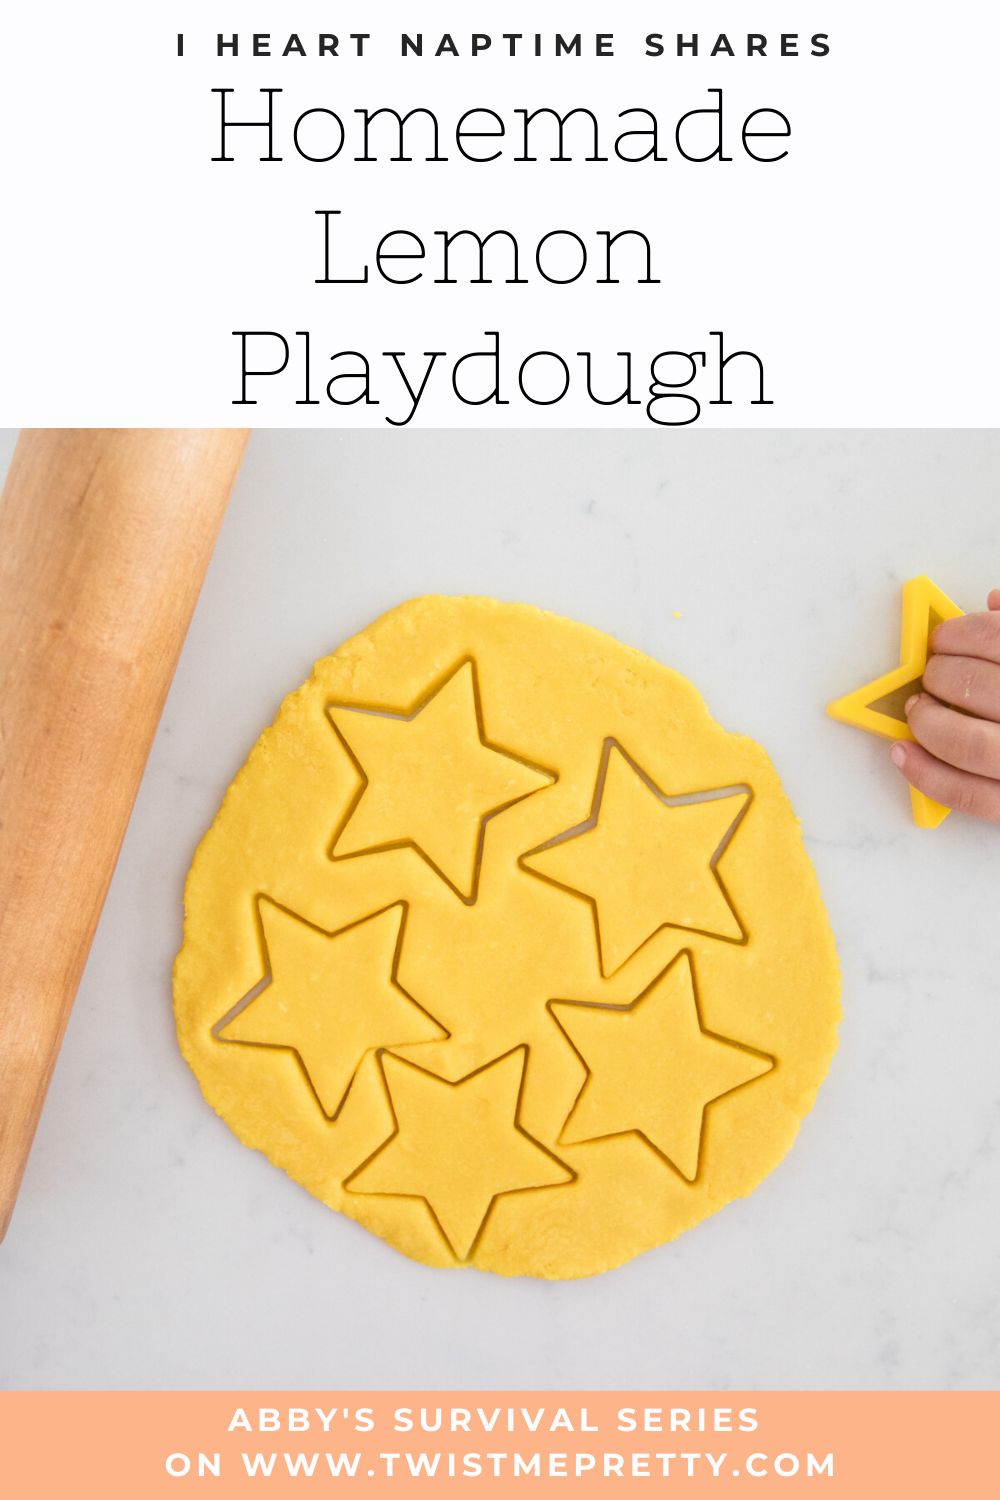 I Heart Naptime's Homemade Lemon Playdough Recipe www.TwistMePretty.com